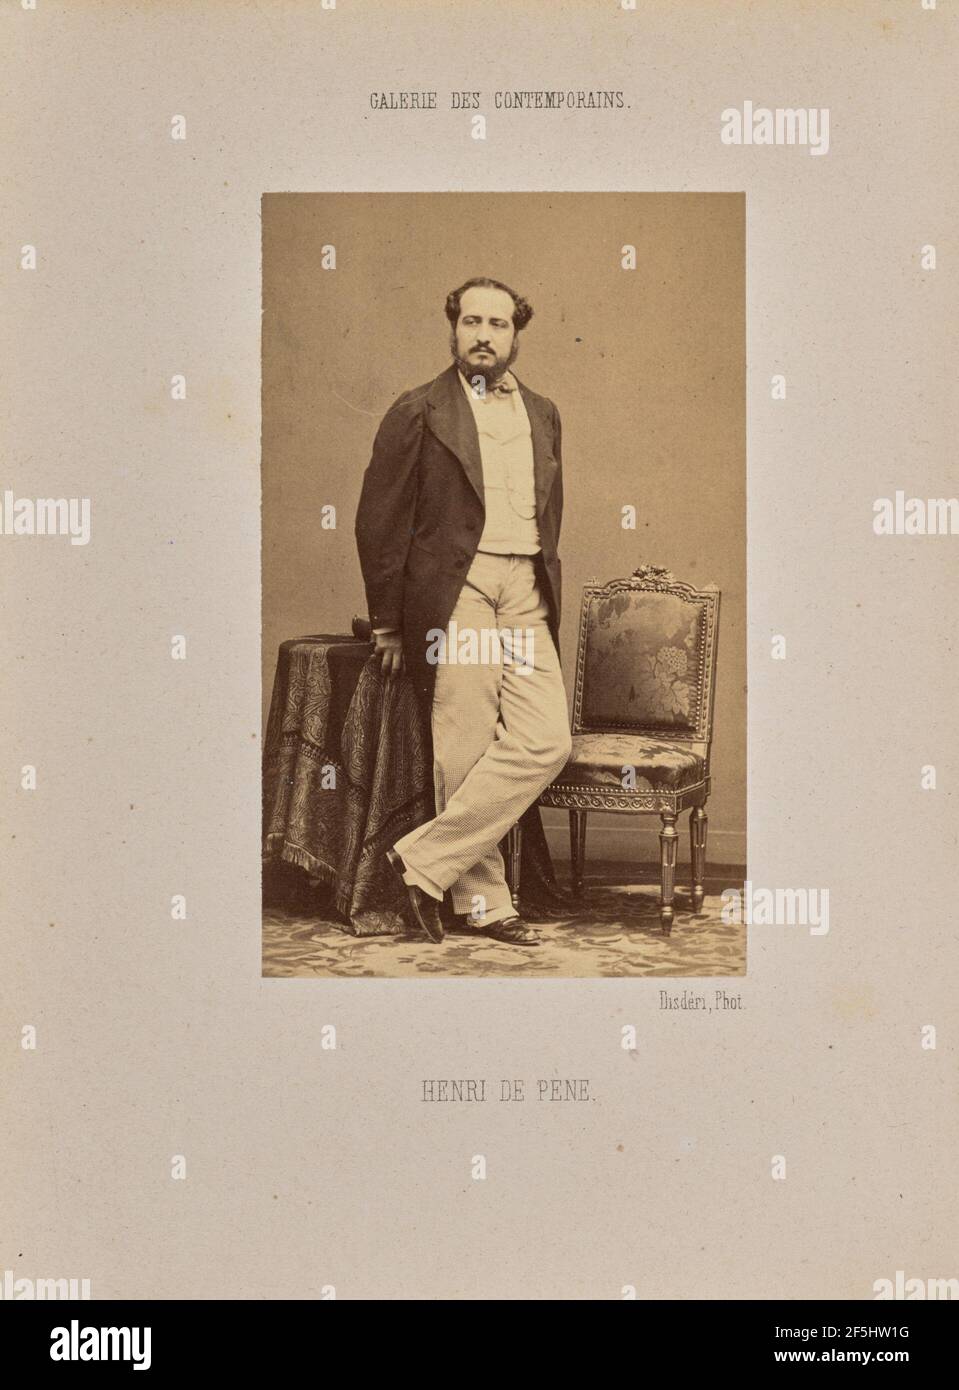 Henri de pene hi-res stock photography and images - Alamy